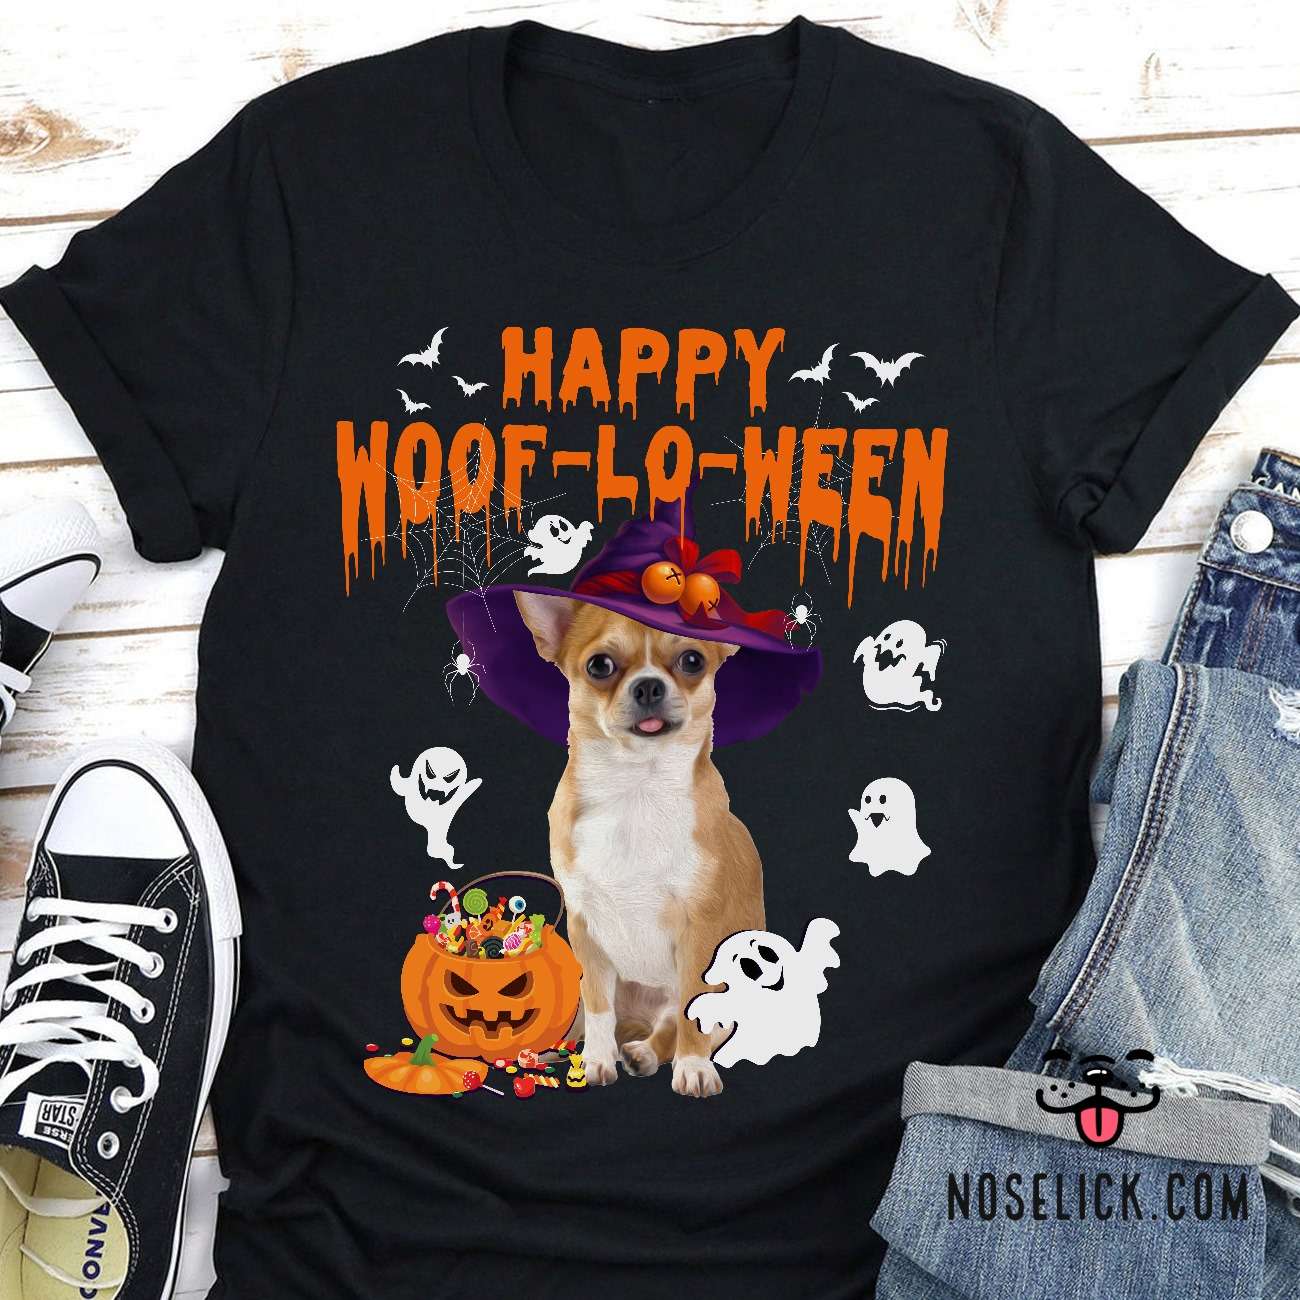 Happy woof-lo-ween - Chihuahua halloween shirt, halloween pumpkin with Chihuahua